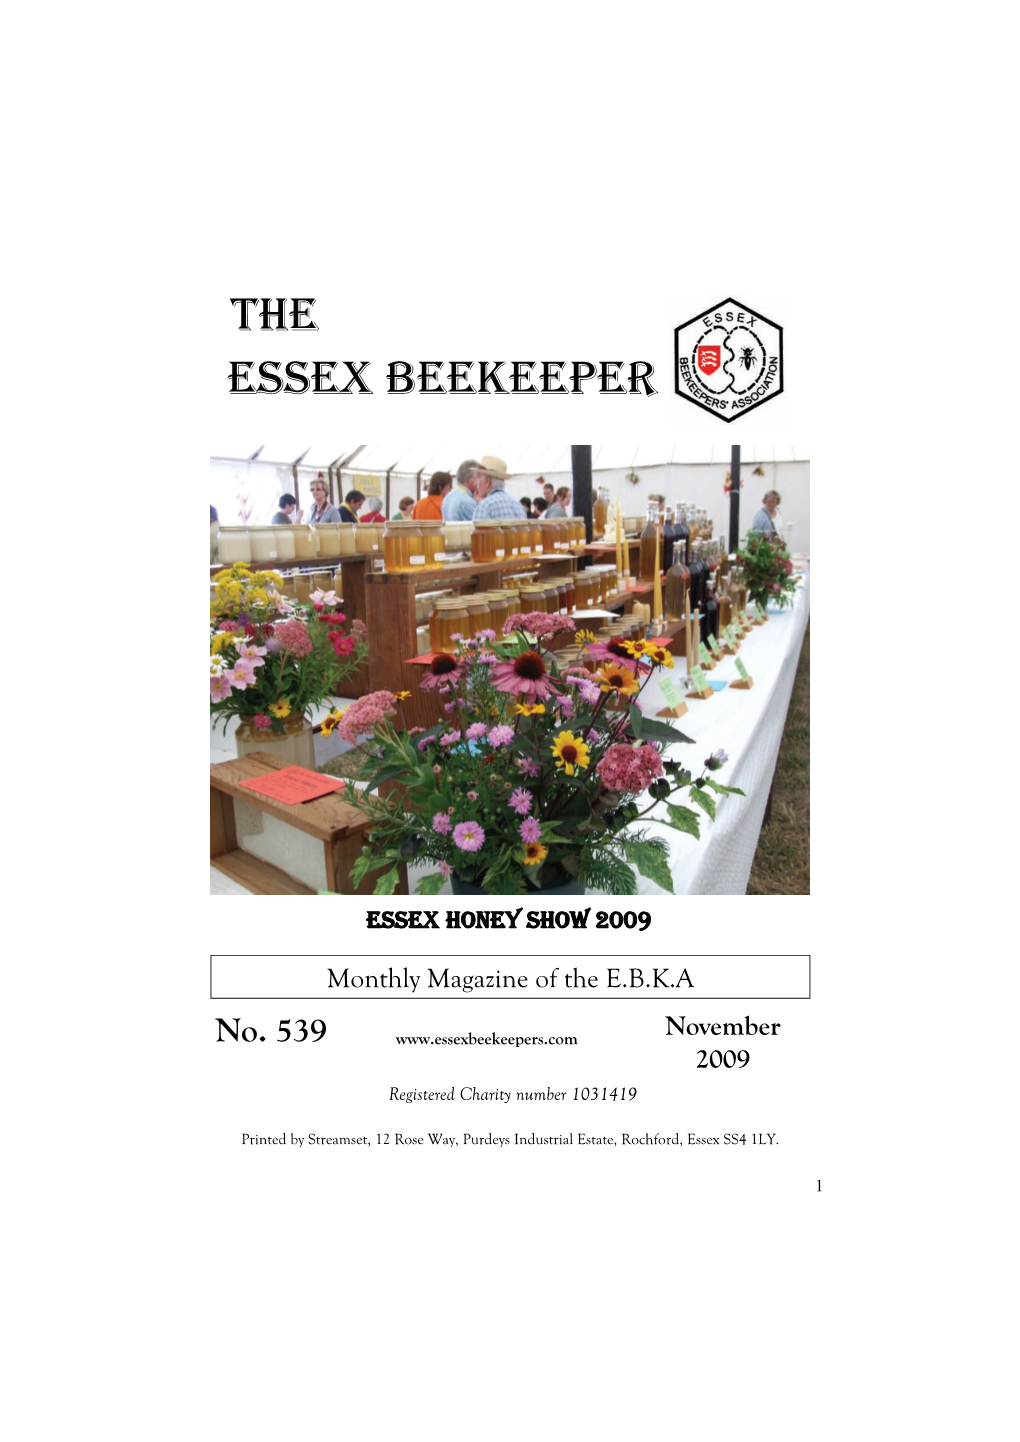 The Essex Beekeeper